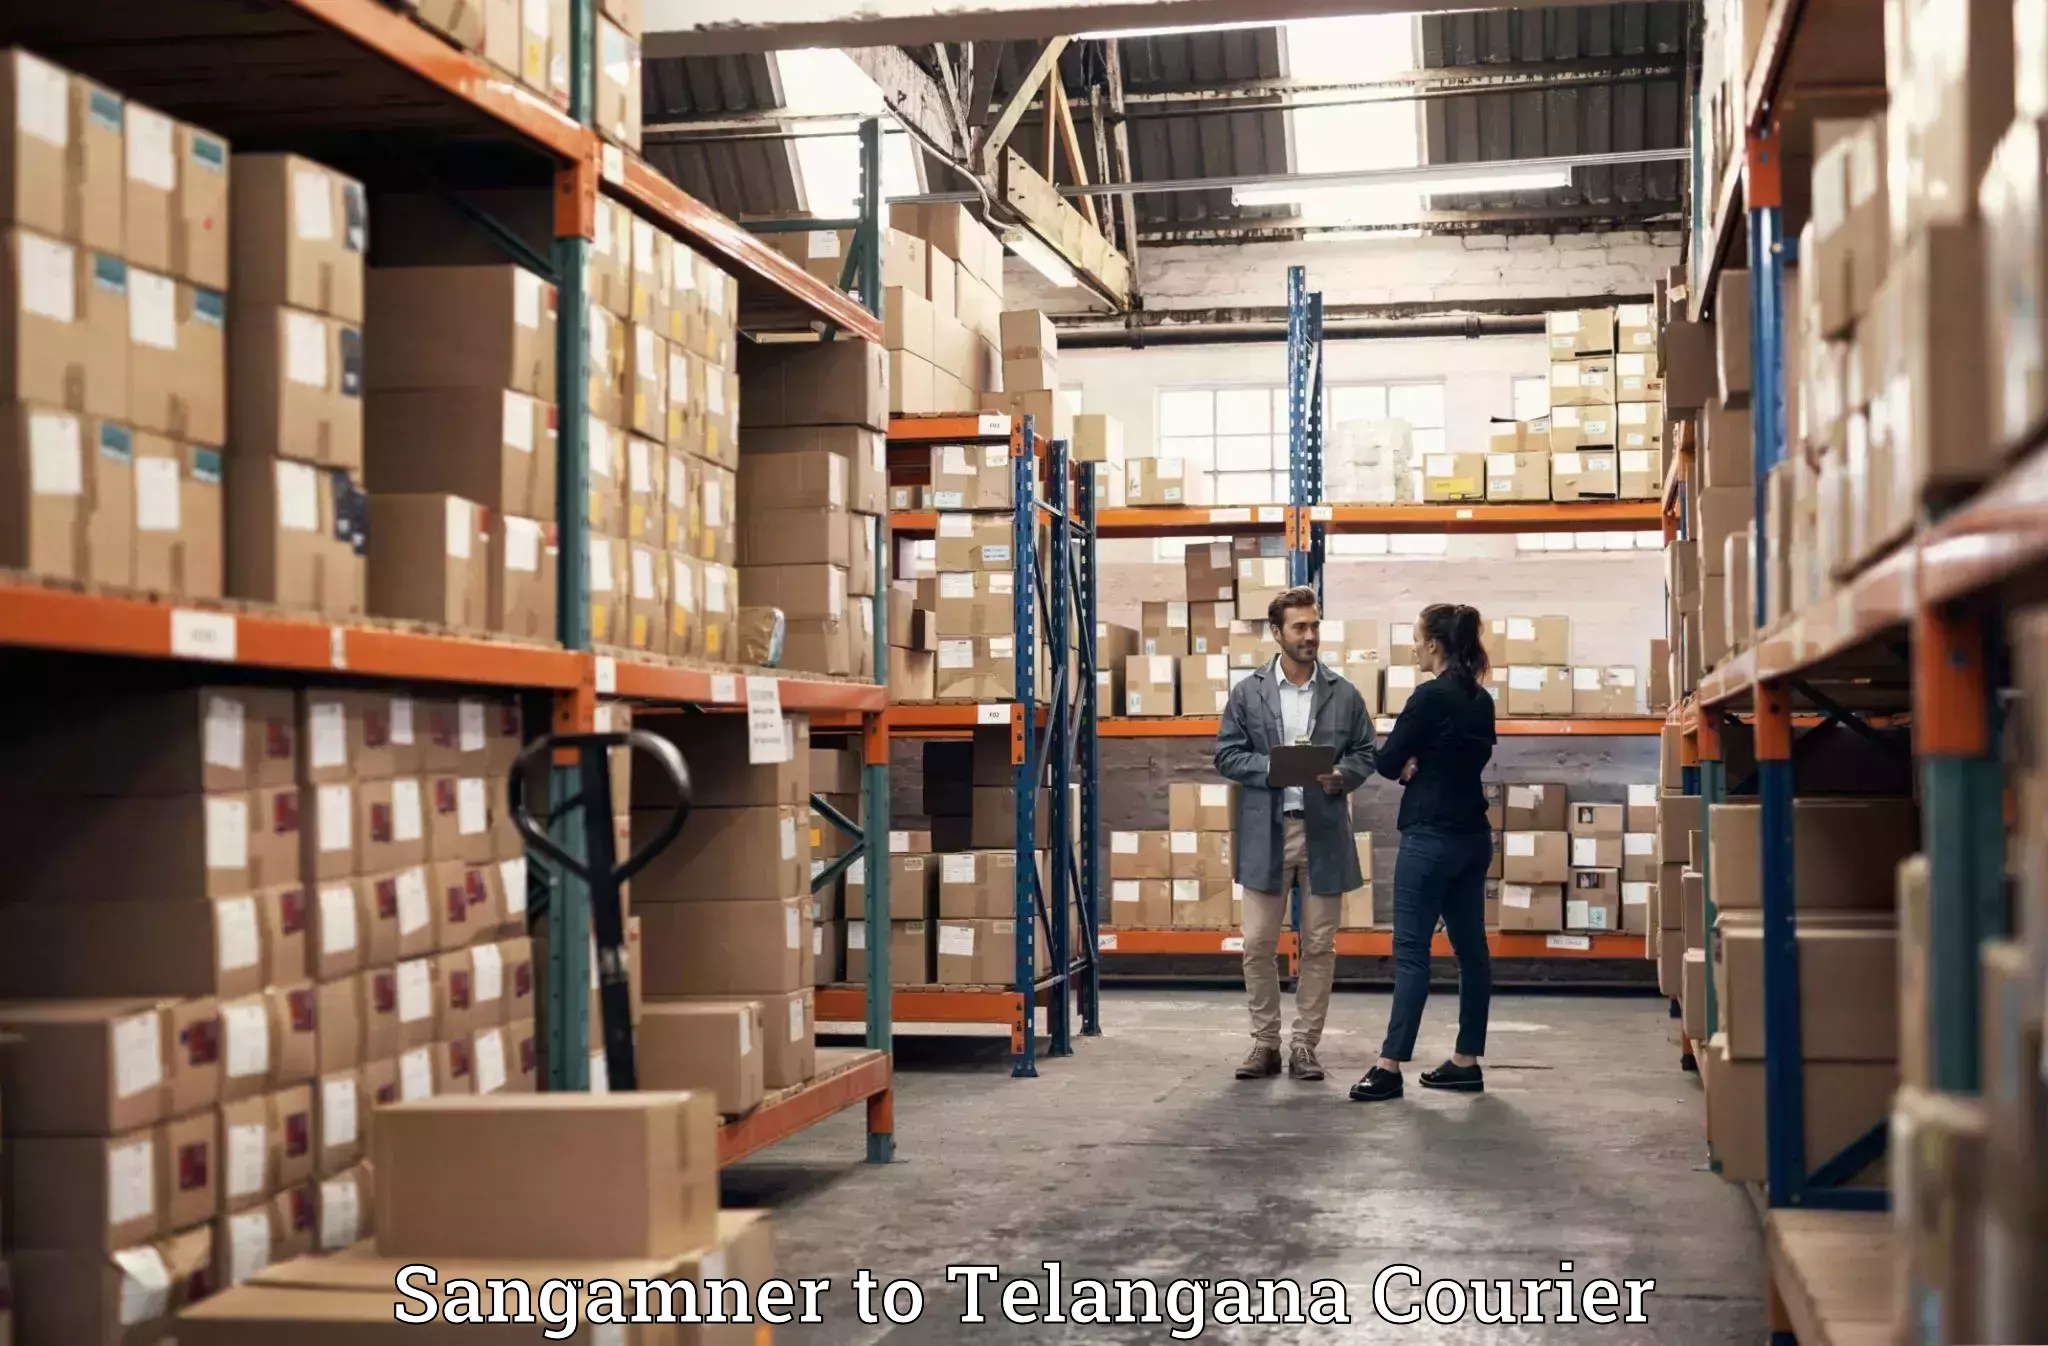 Luggage delivery app Sangamner to Telangana